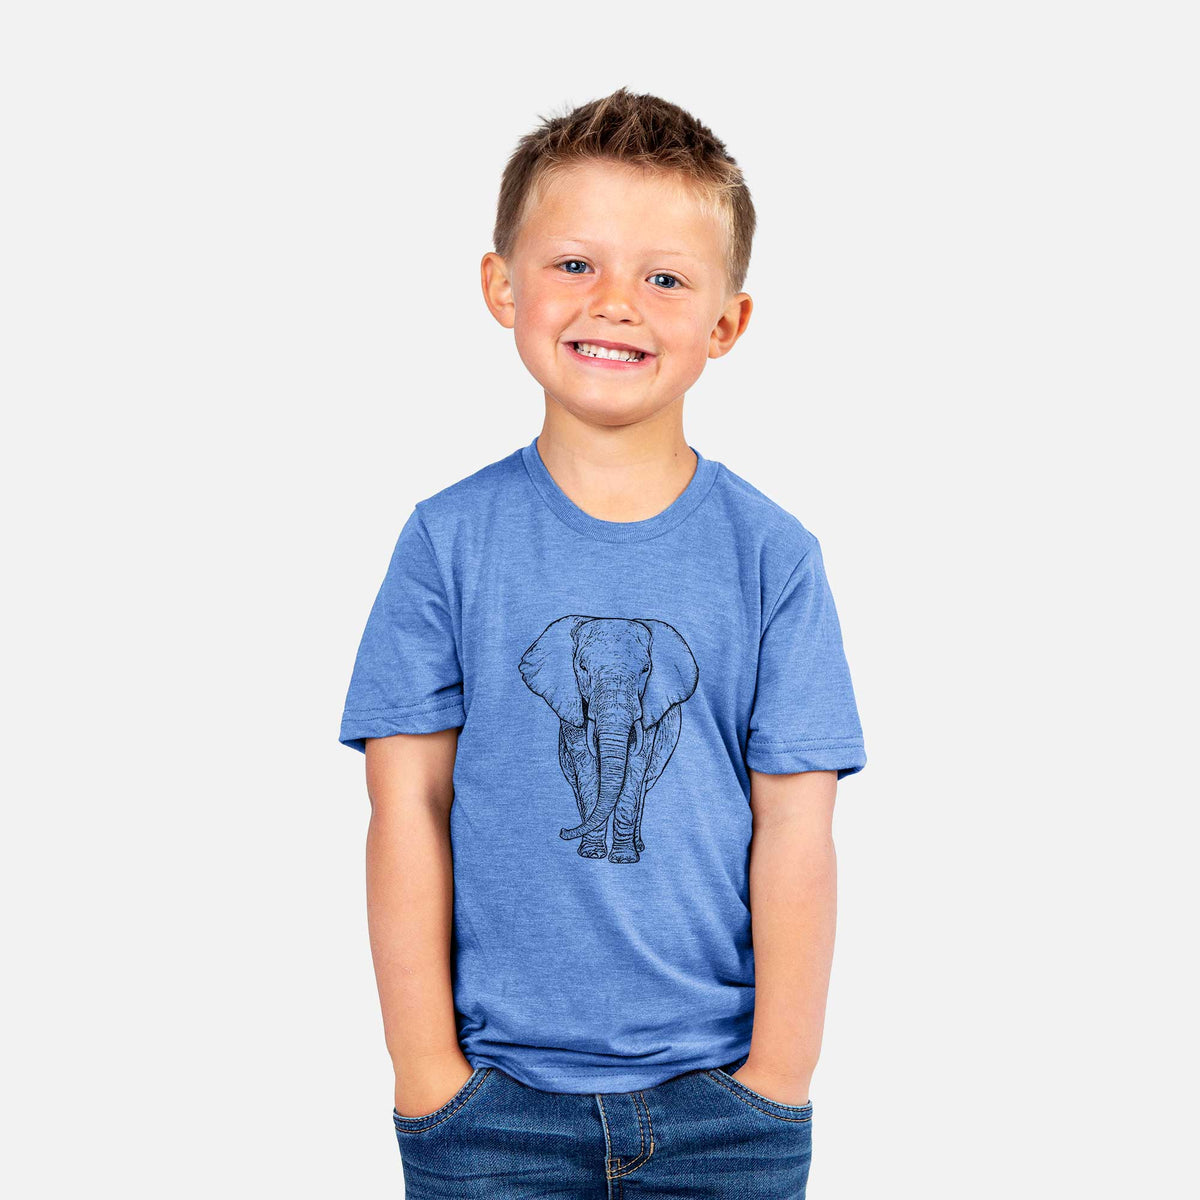 Loxodonta africana - African Elephant - Kids Shirt